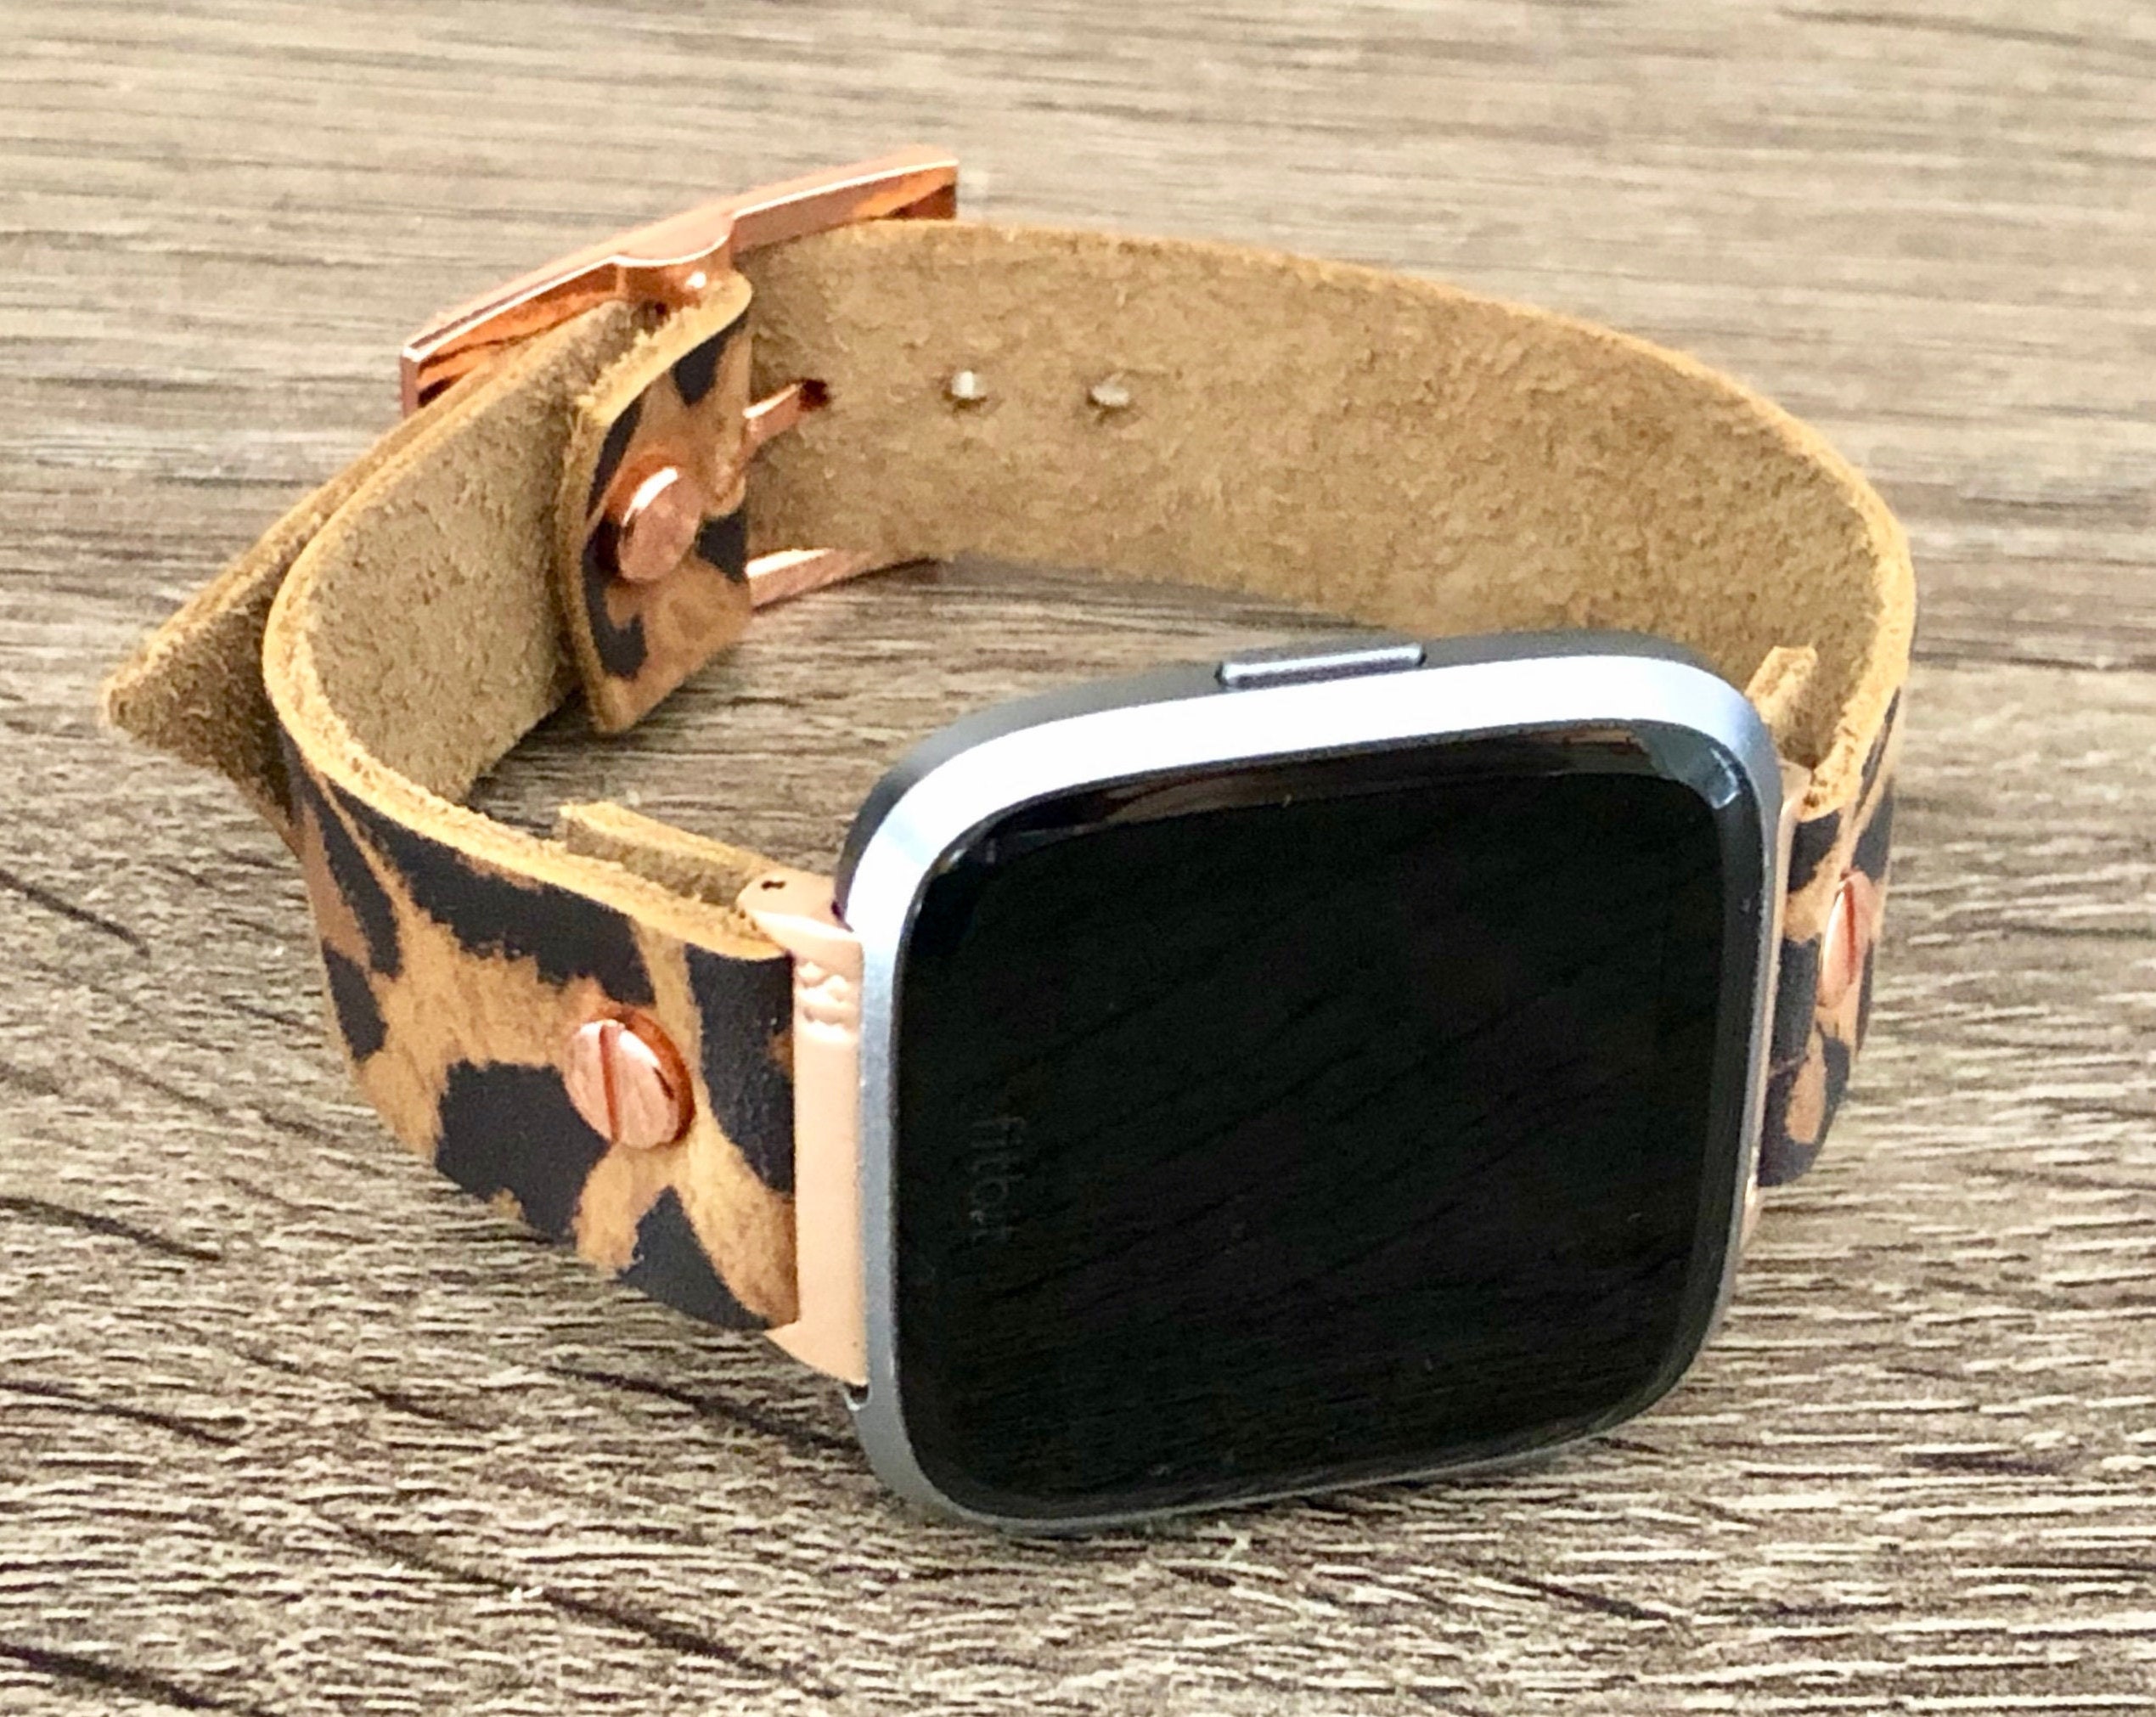 Leopard Print Leather Fitbit Versa 2 Band Rose Gold Fitbit Versa Lite Watch  Strap Adjustable Fitbit Versa Band 18mm Leather Watch Wristband